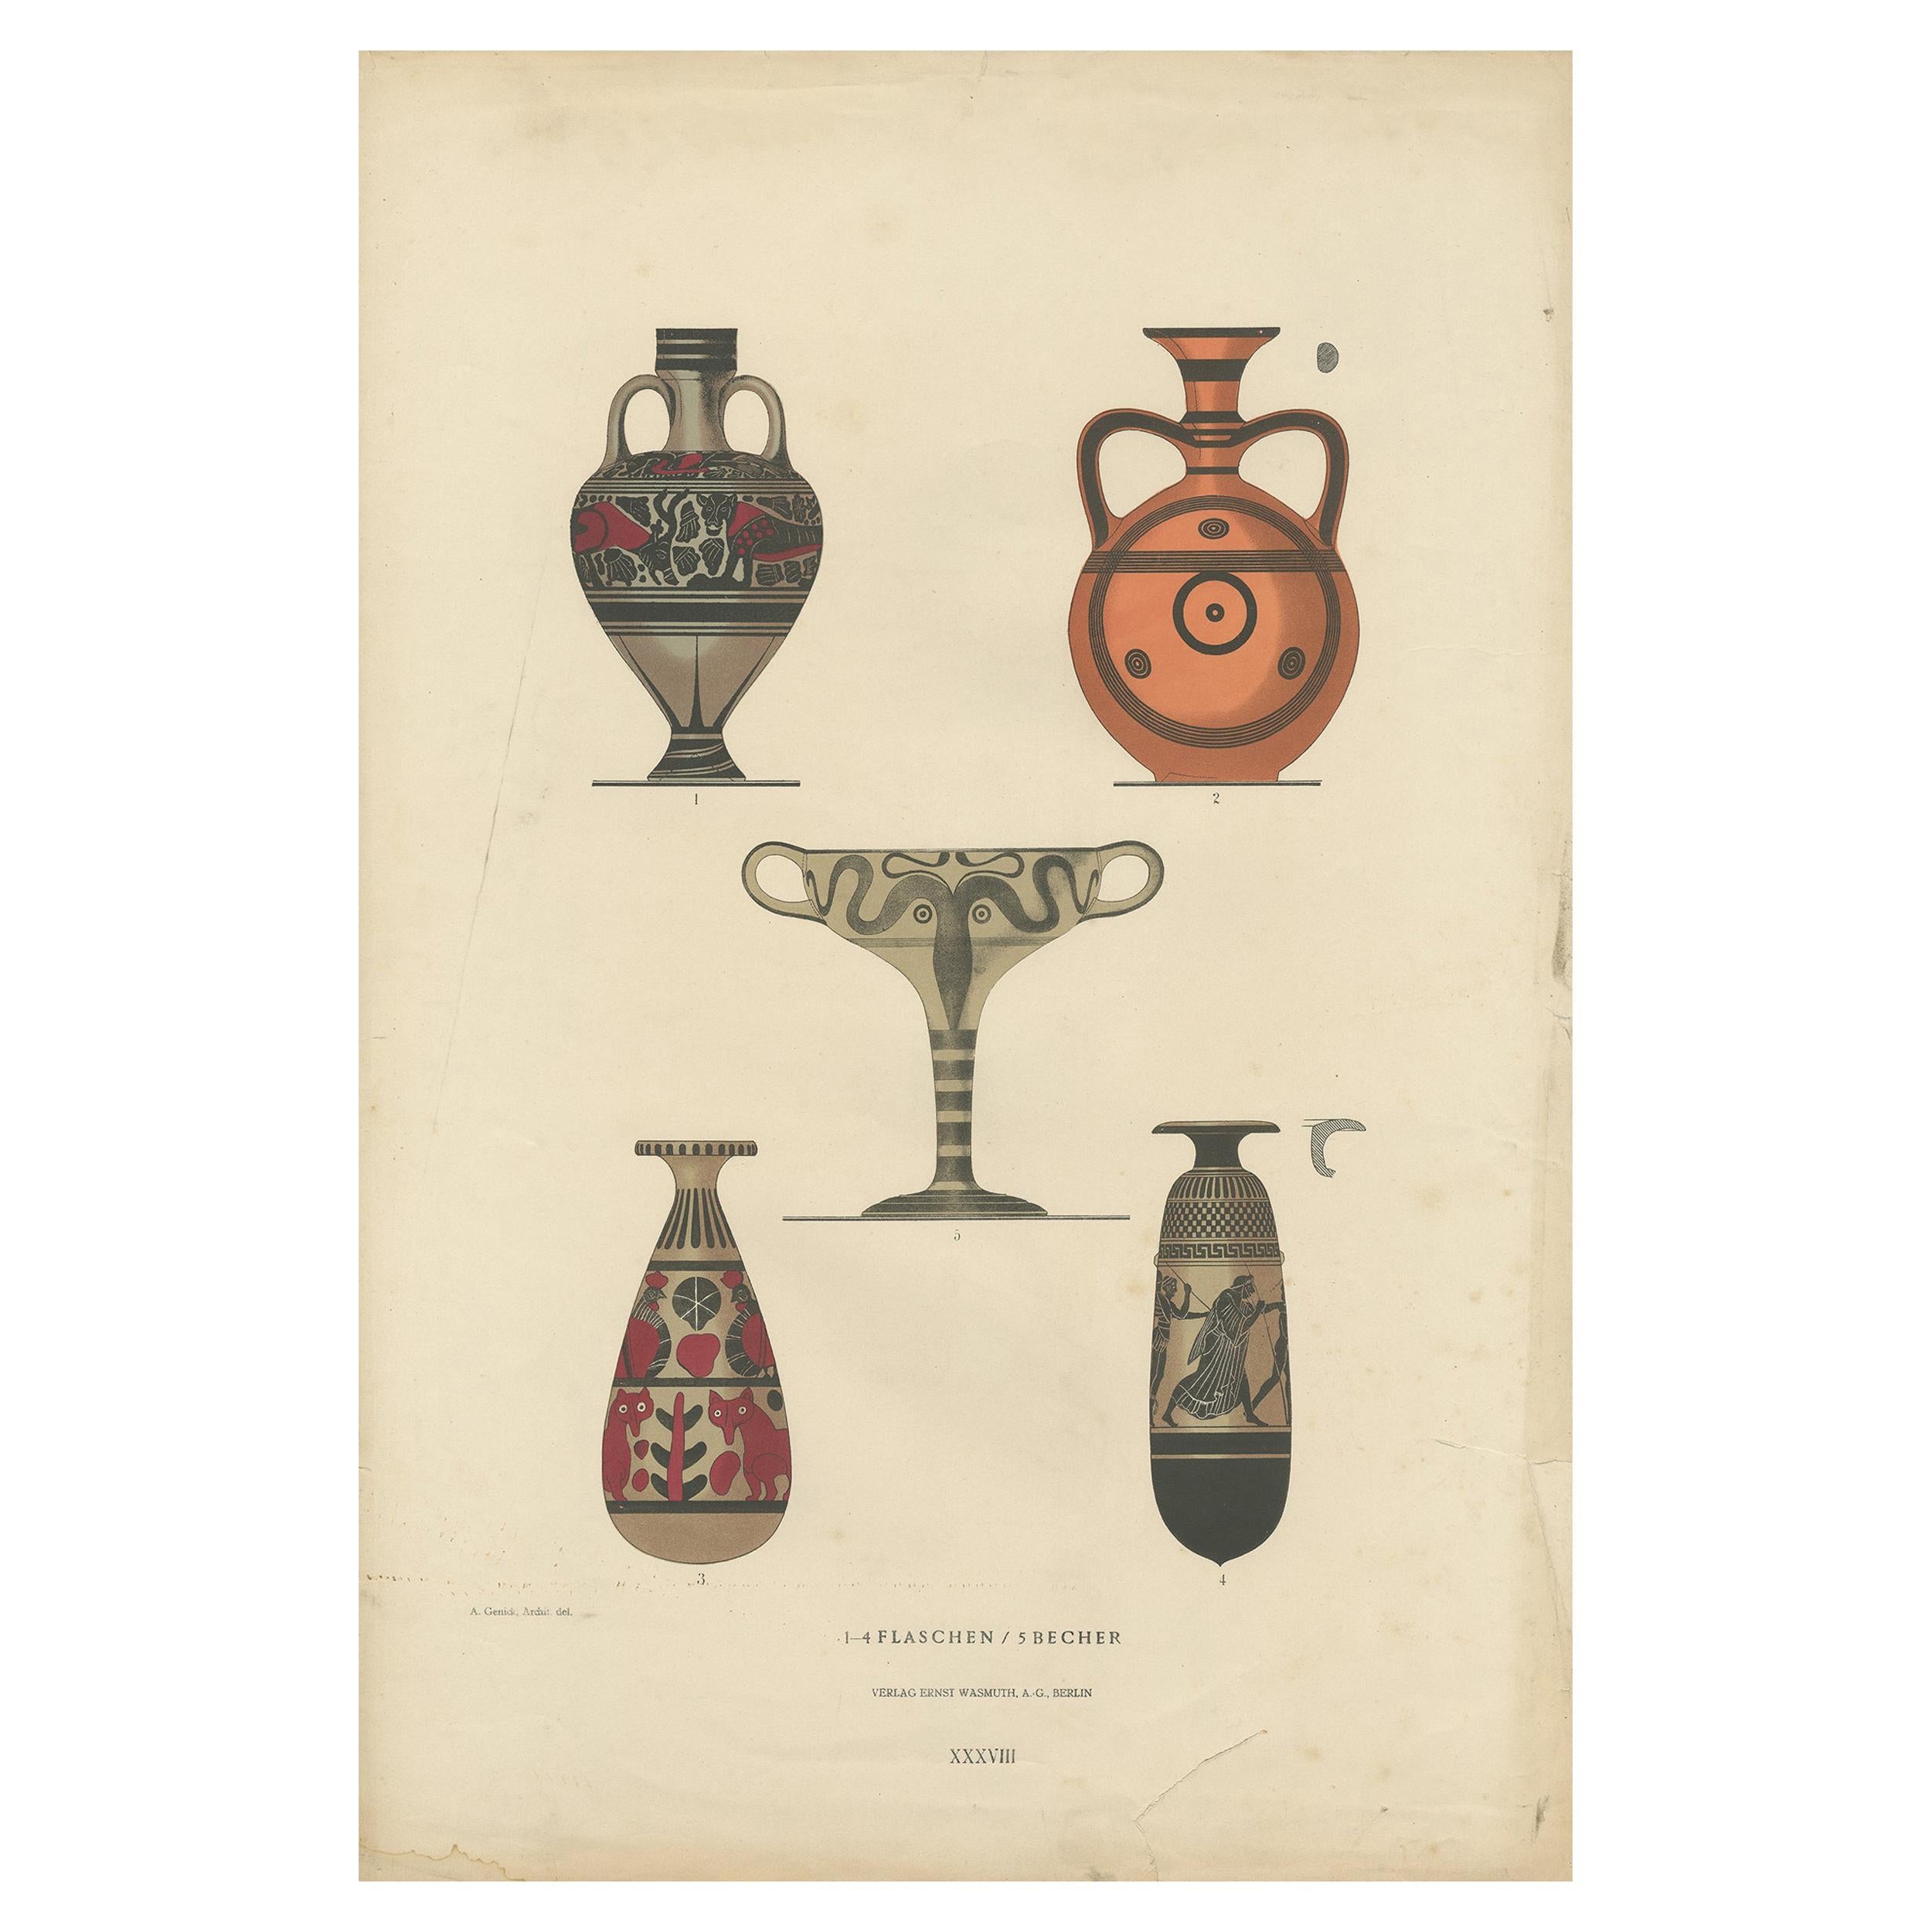 Antique Print of Greek Ceramics 'Flaschen/Becher' by Genick, 1883